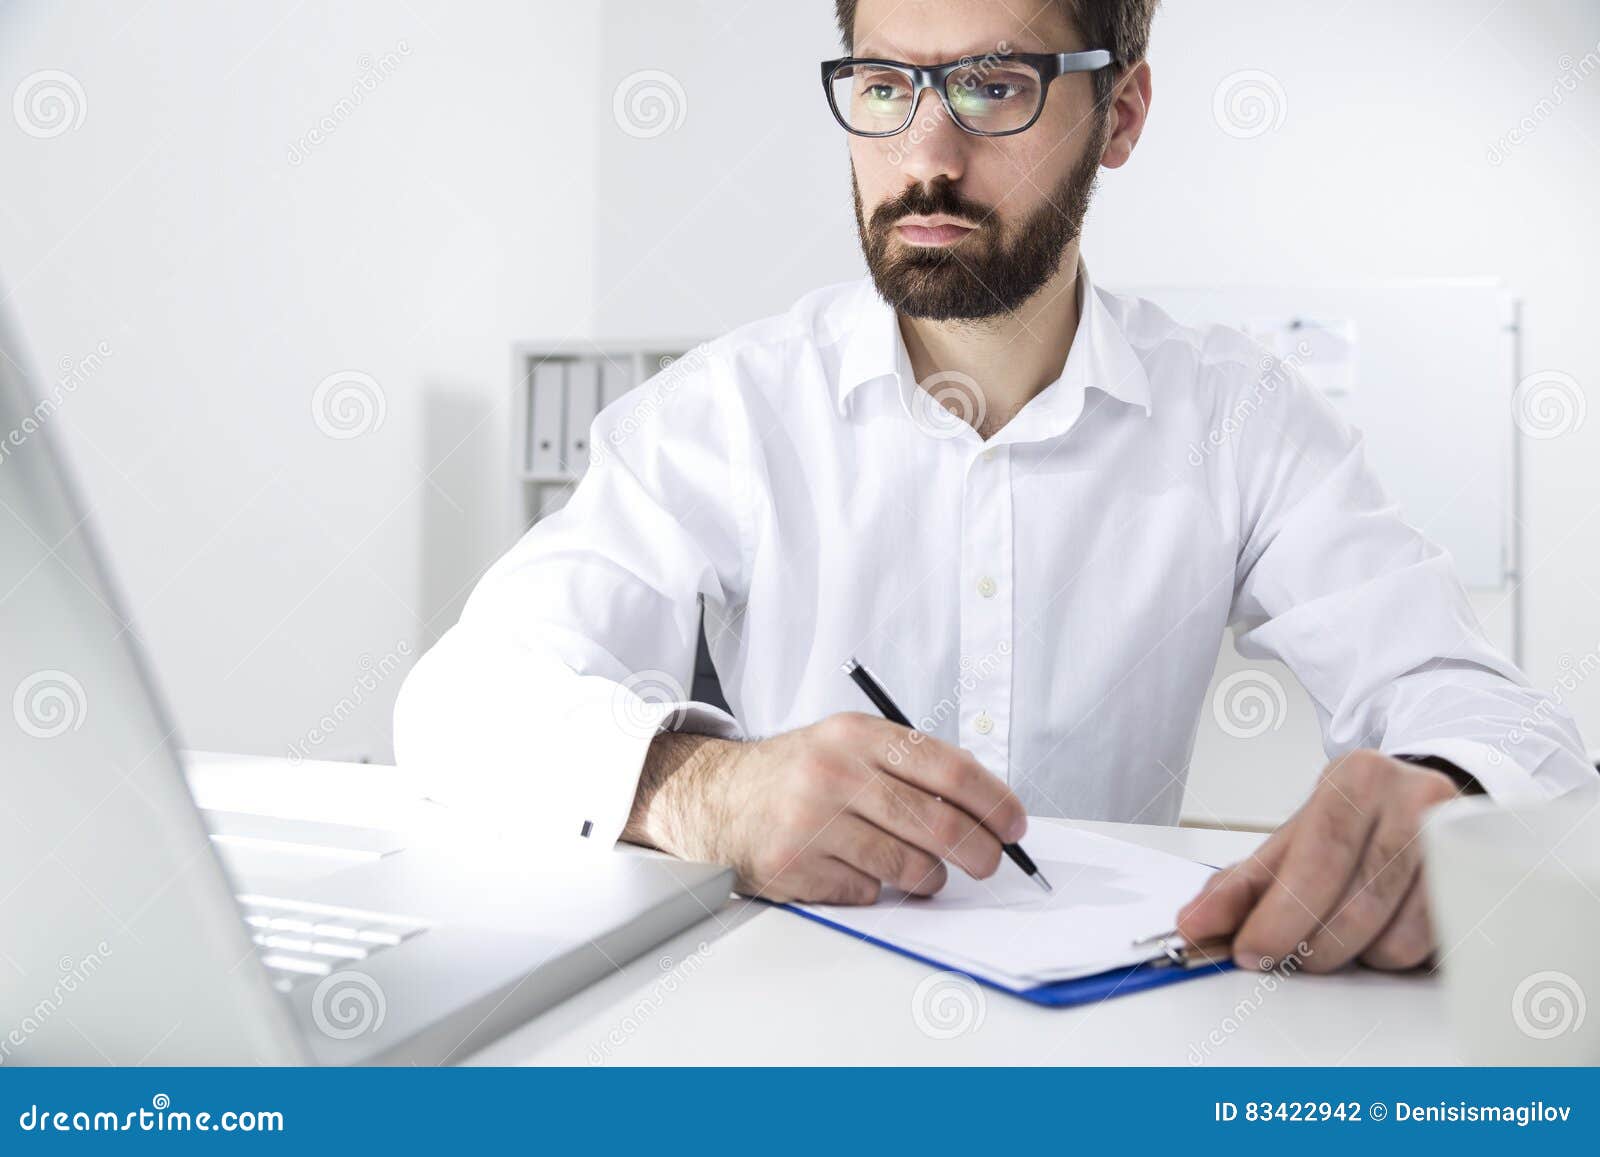 portrait-young-bearded-man-taking-notes-beard-wearing-glasses-white-shirt-sitting-his-desk-writing-83422942.jpg